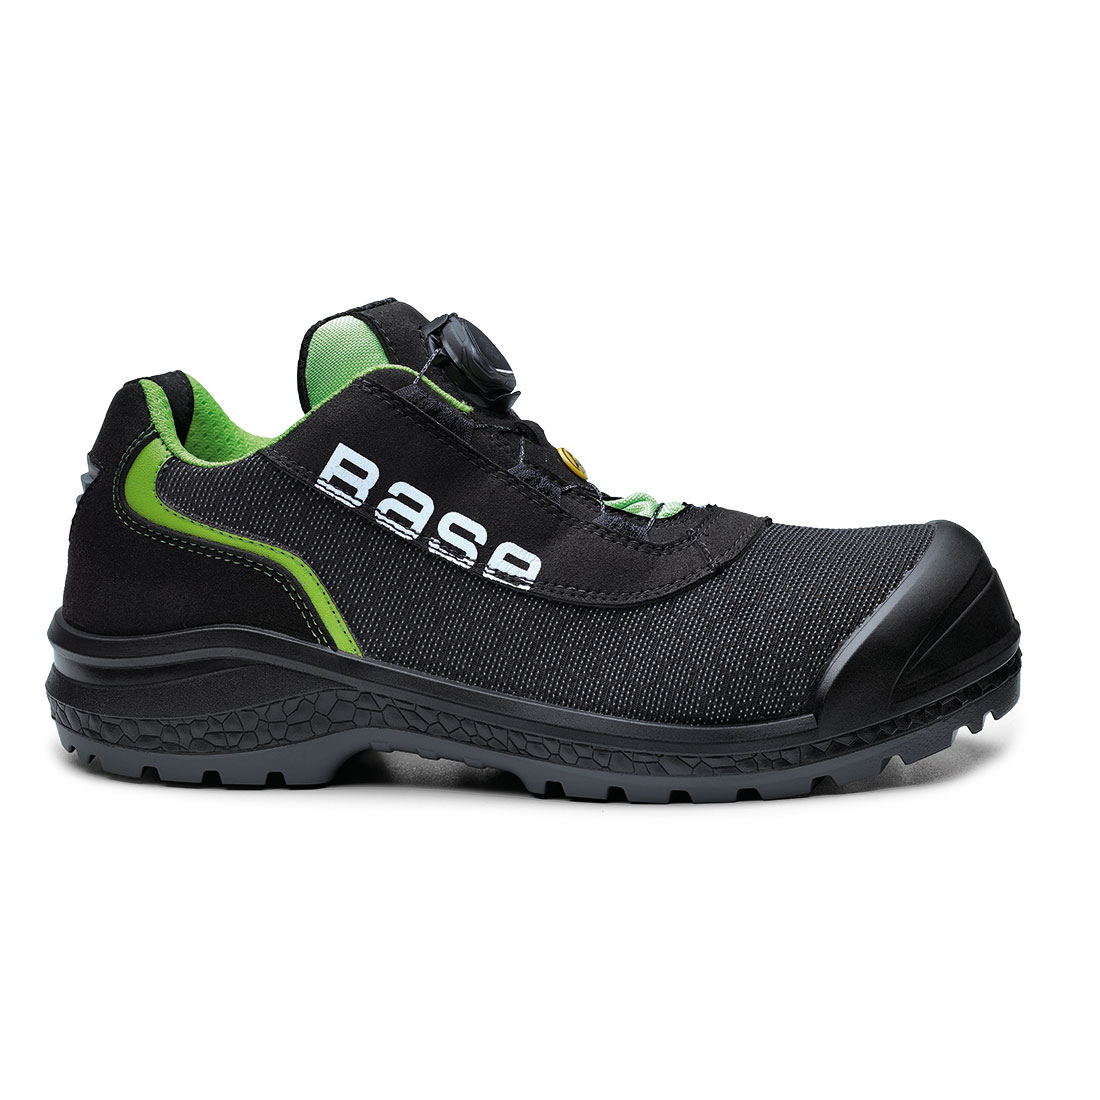 Base Be-Ready  Low Shoes Black/Green B0822